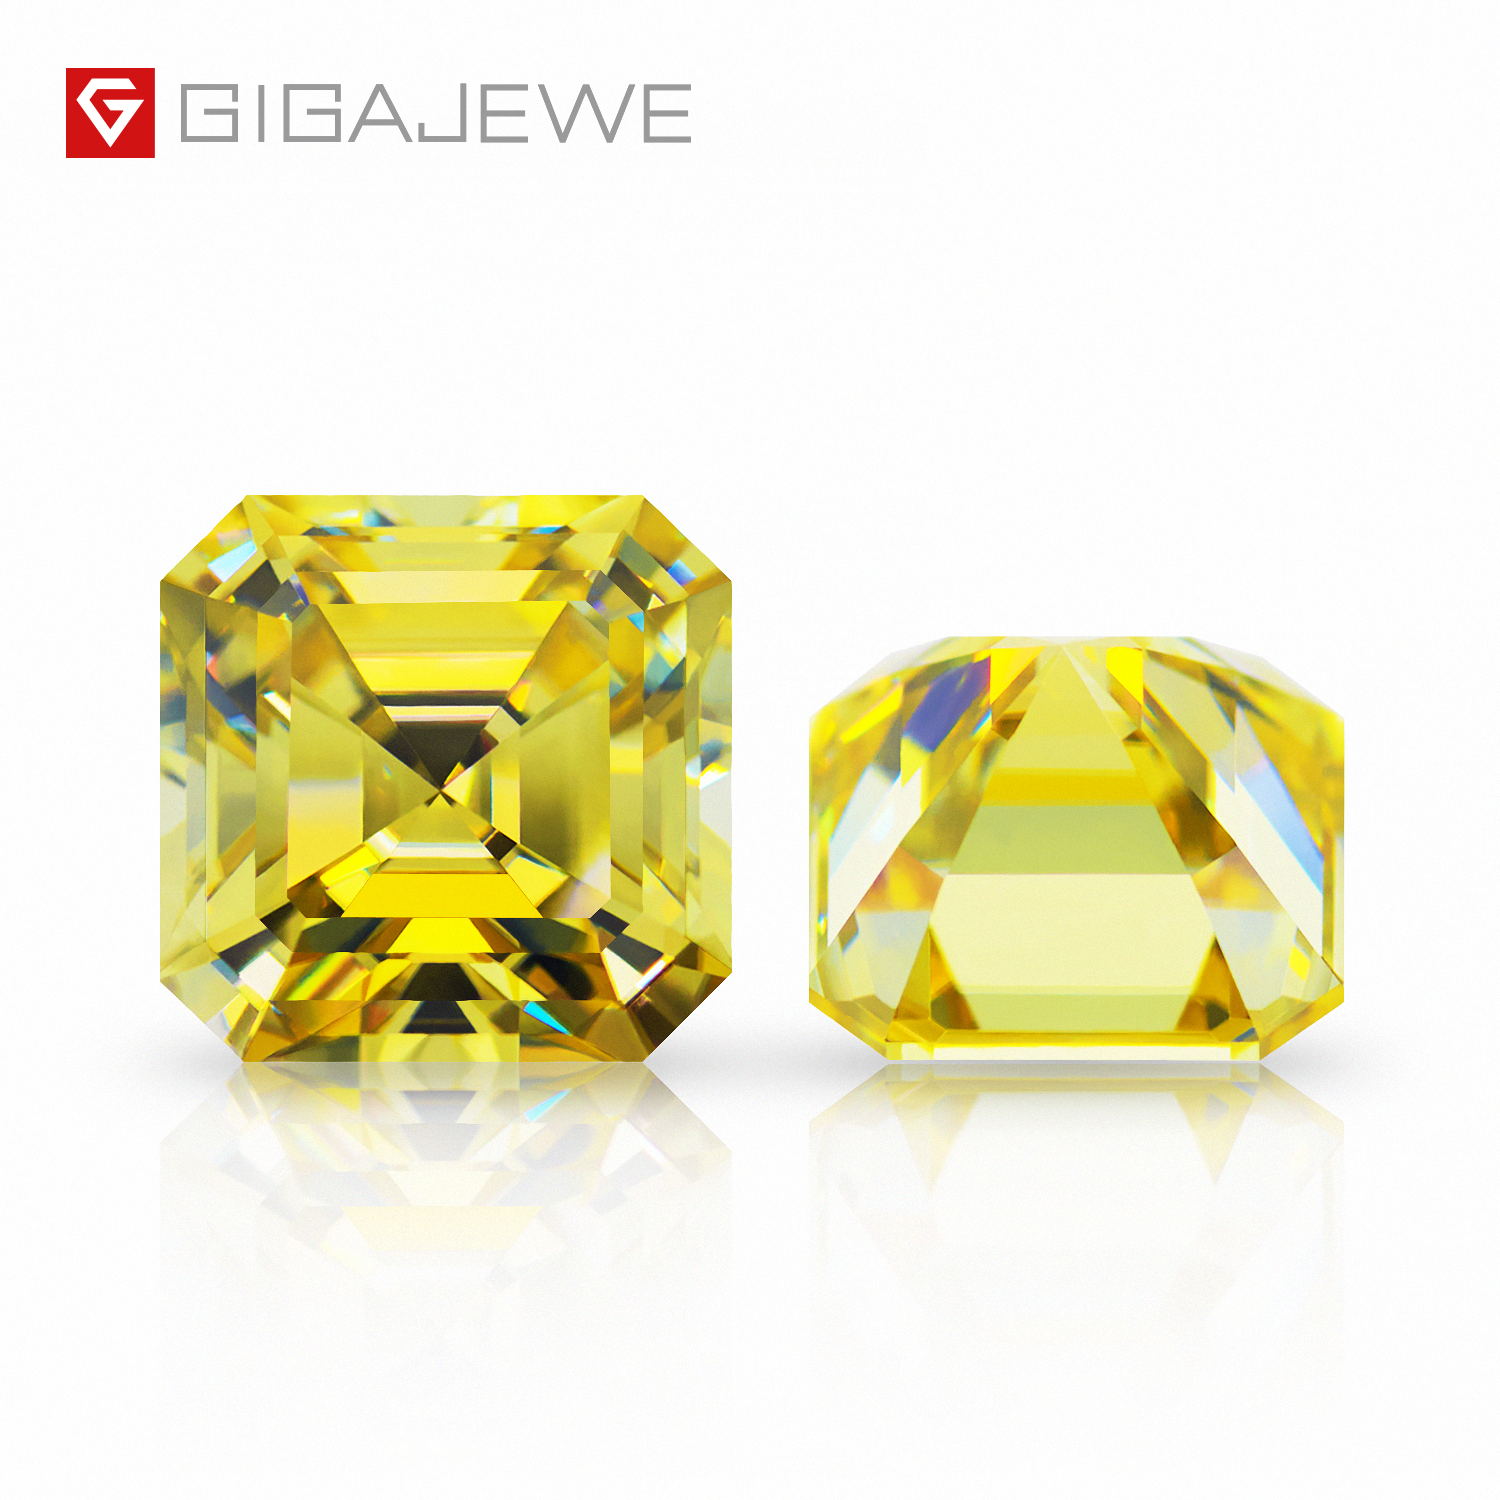 GIGAJEWE 定制稀有 Asscher 切工鲜艳黄色 VVS1 莫桑石裸钻测试通过宝石用于珠宝制作